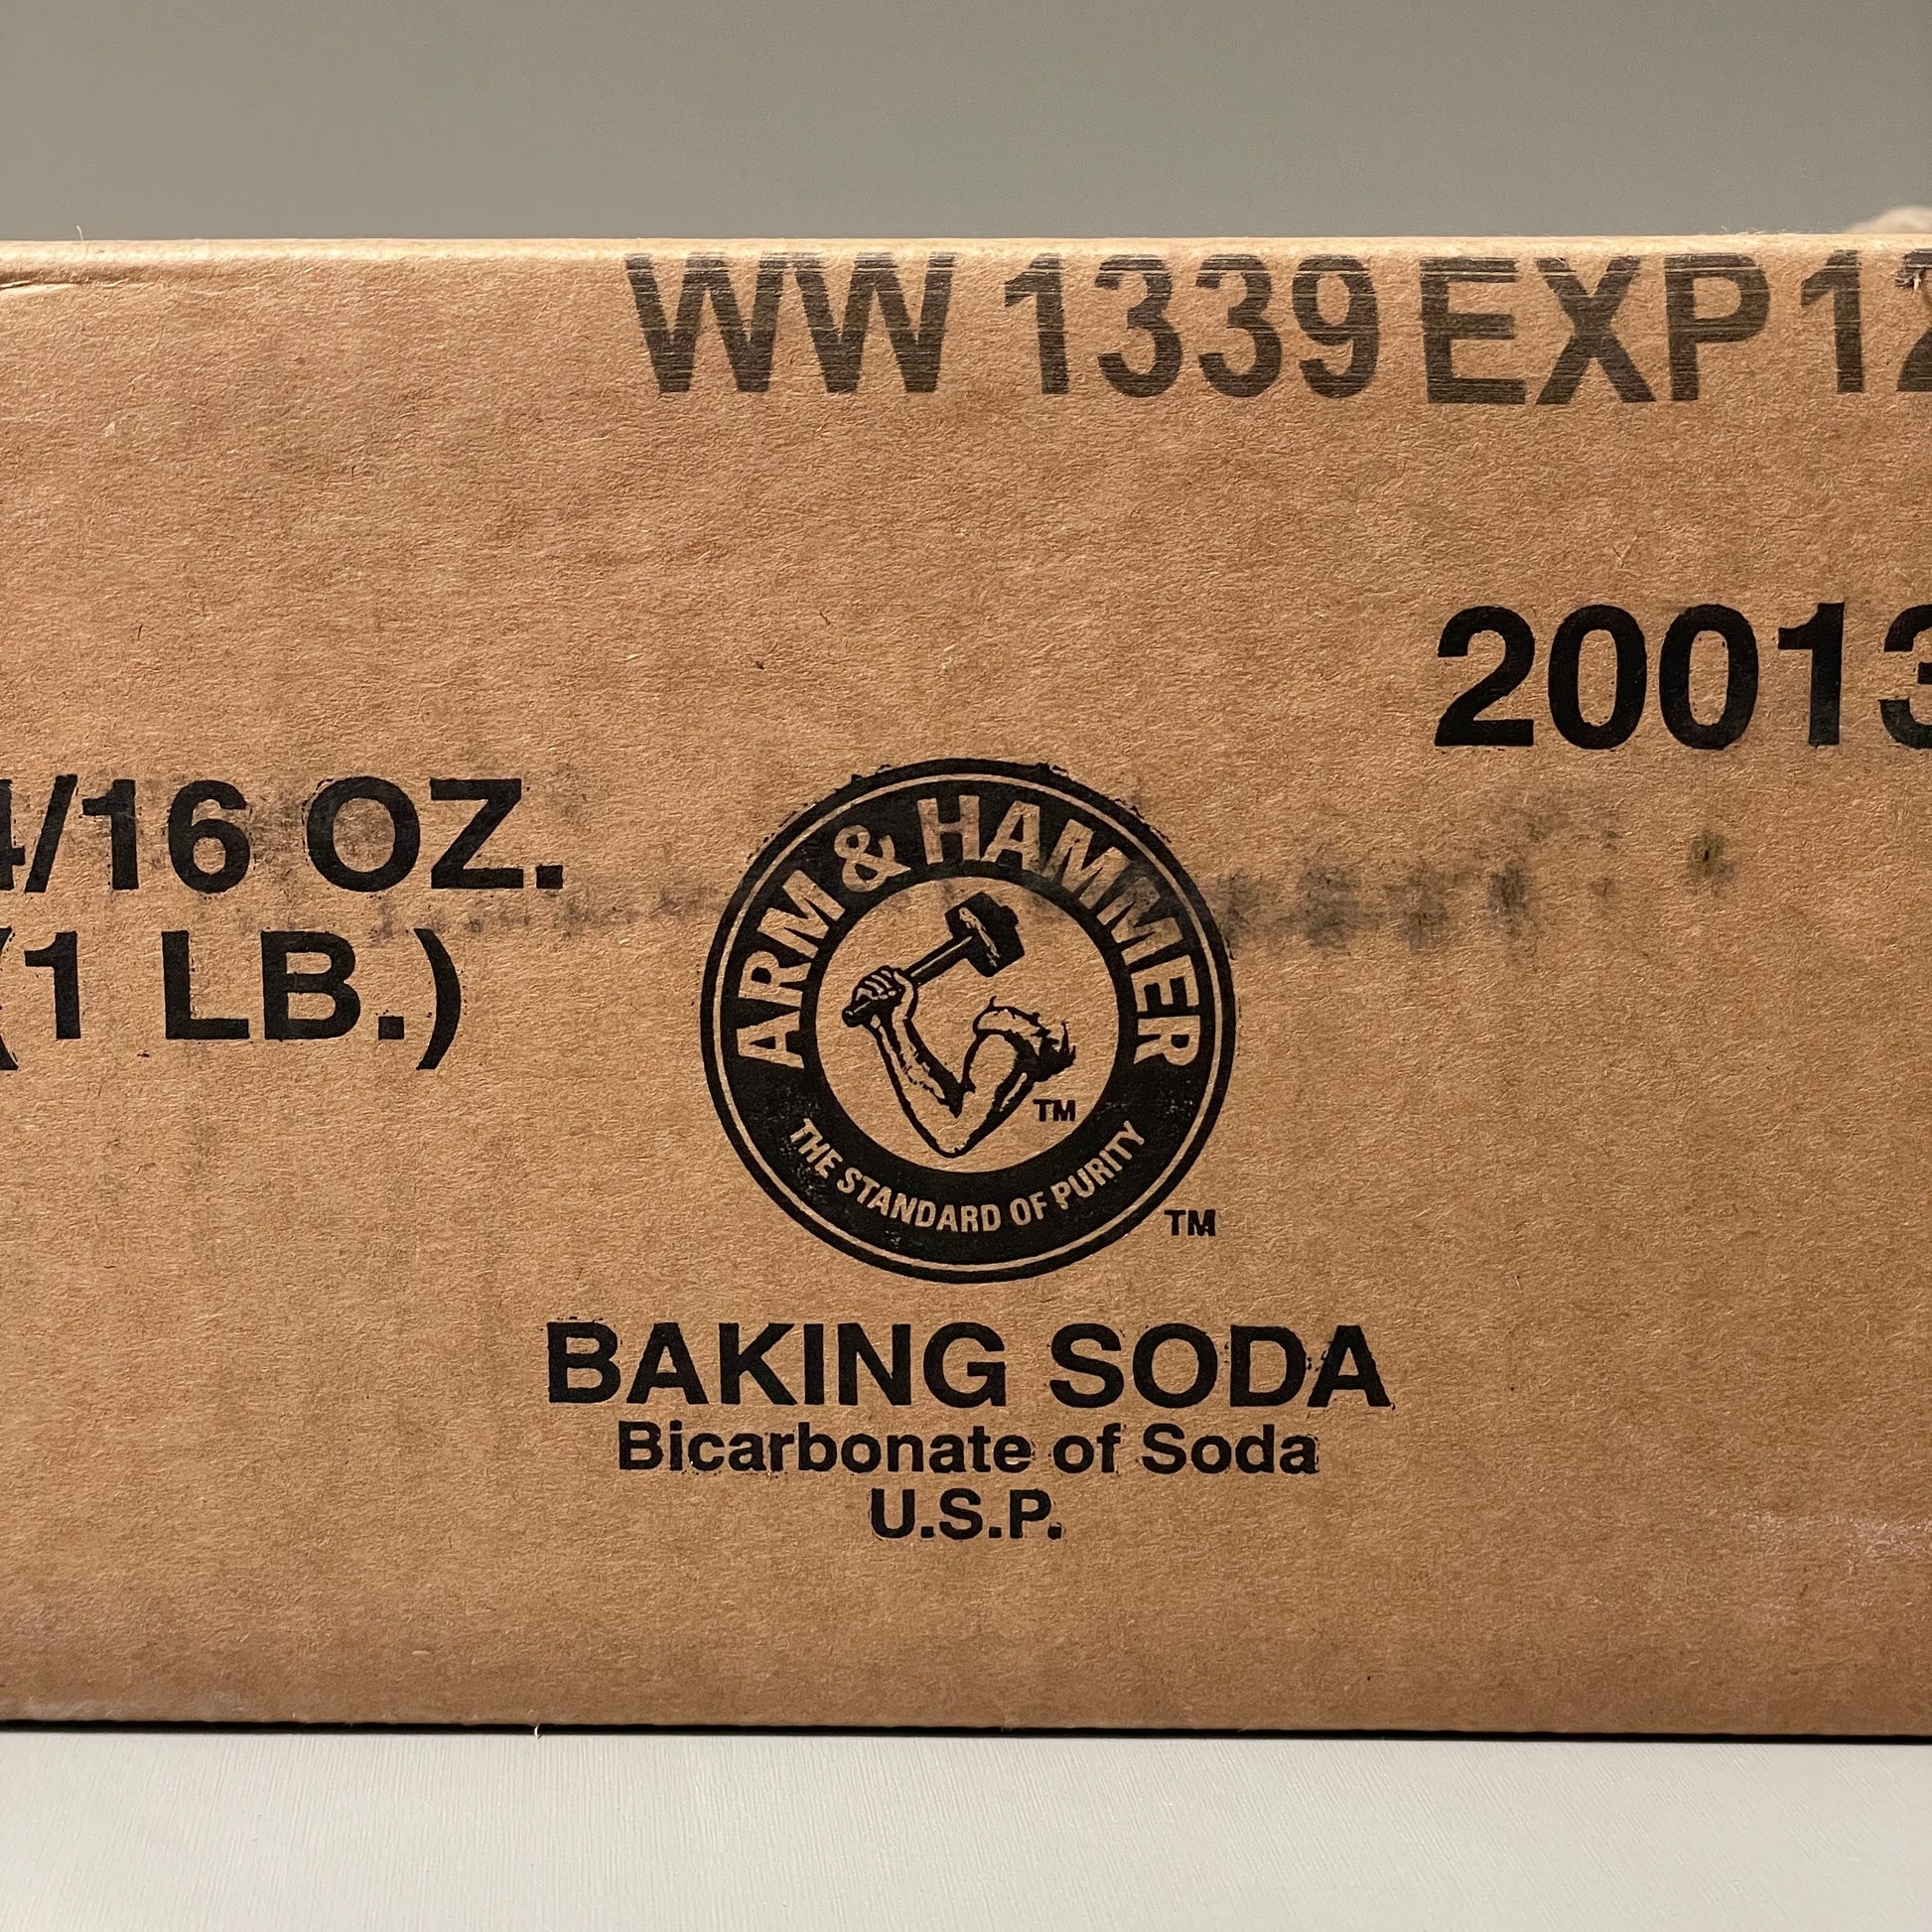 Arm & Hammer Baking Soda, 1 lb. 